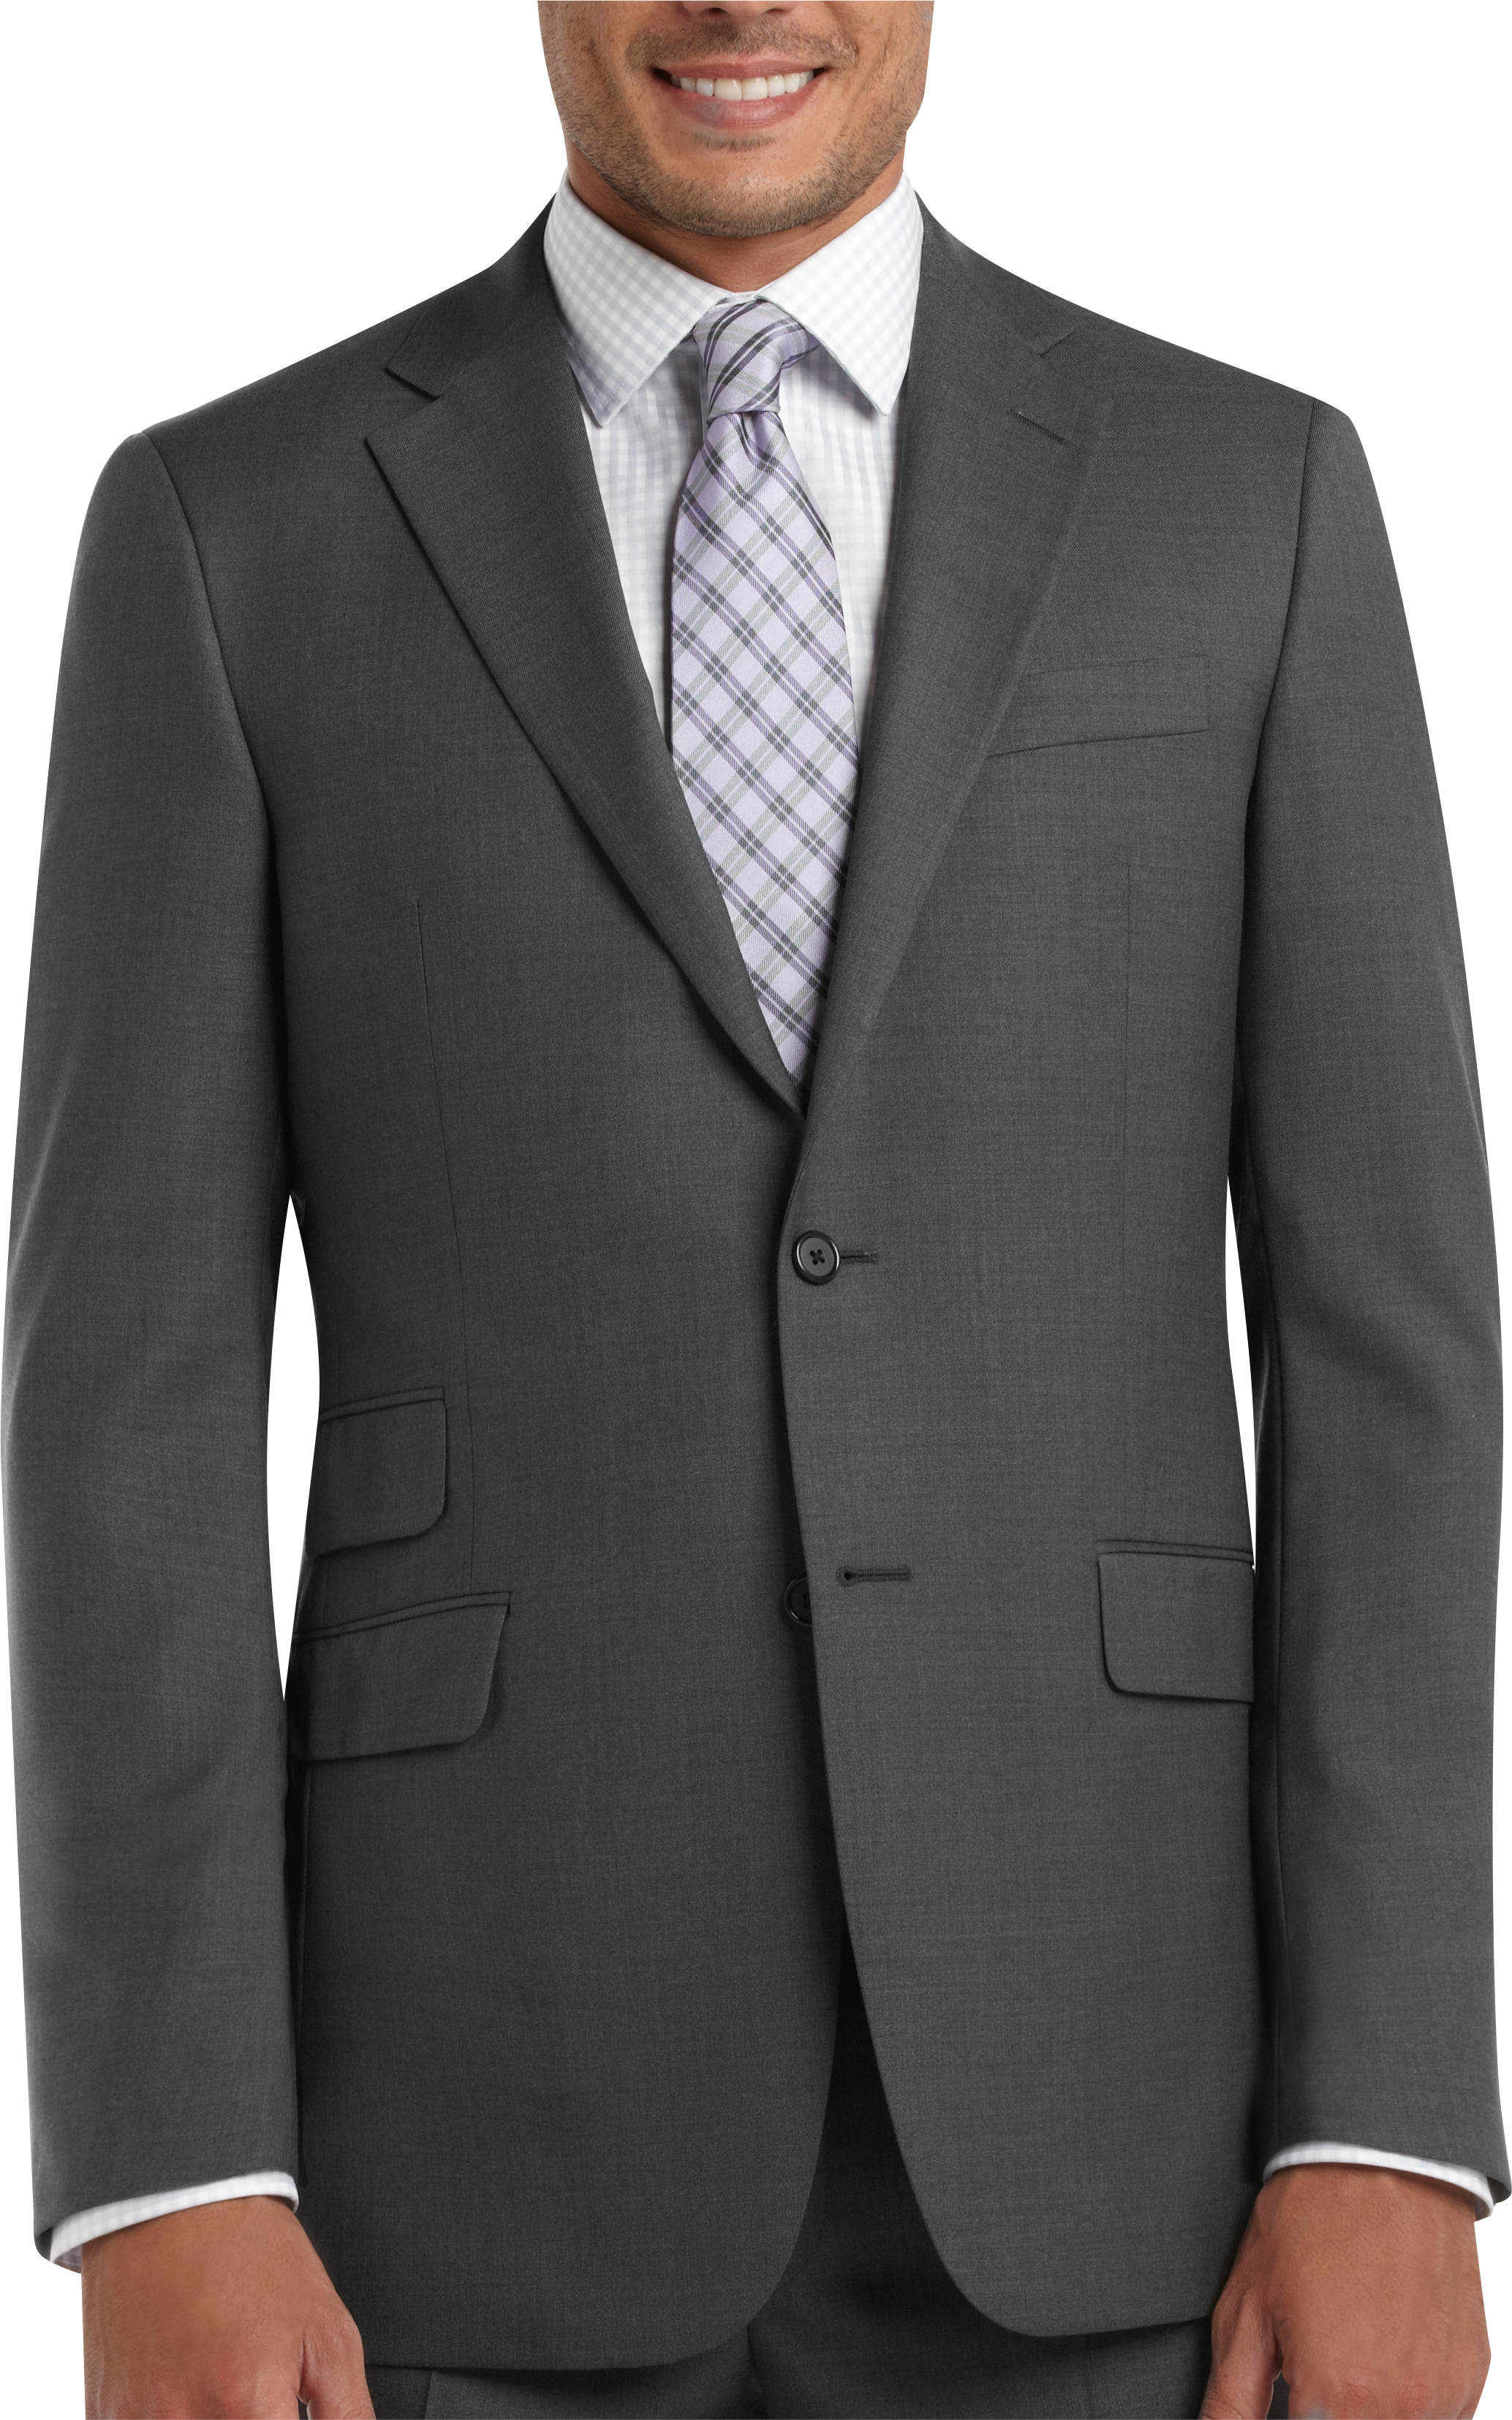 Hickey Freeman Charcoal Gray Classic Fit Suit - Men's Sale | Men's ...